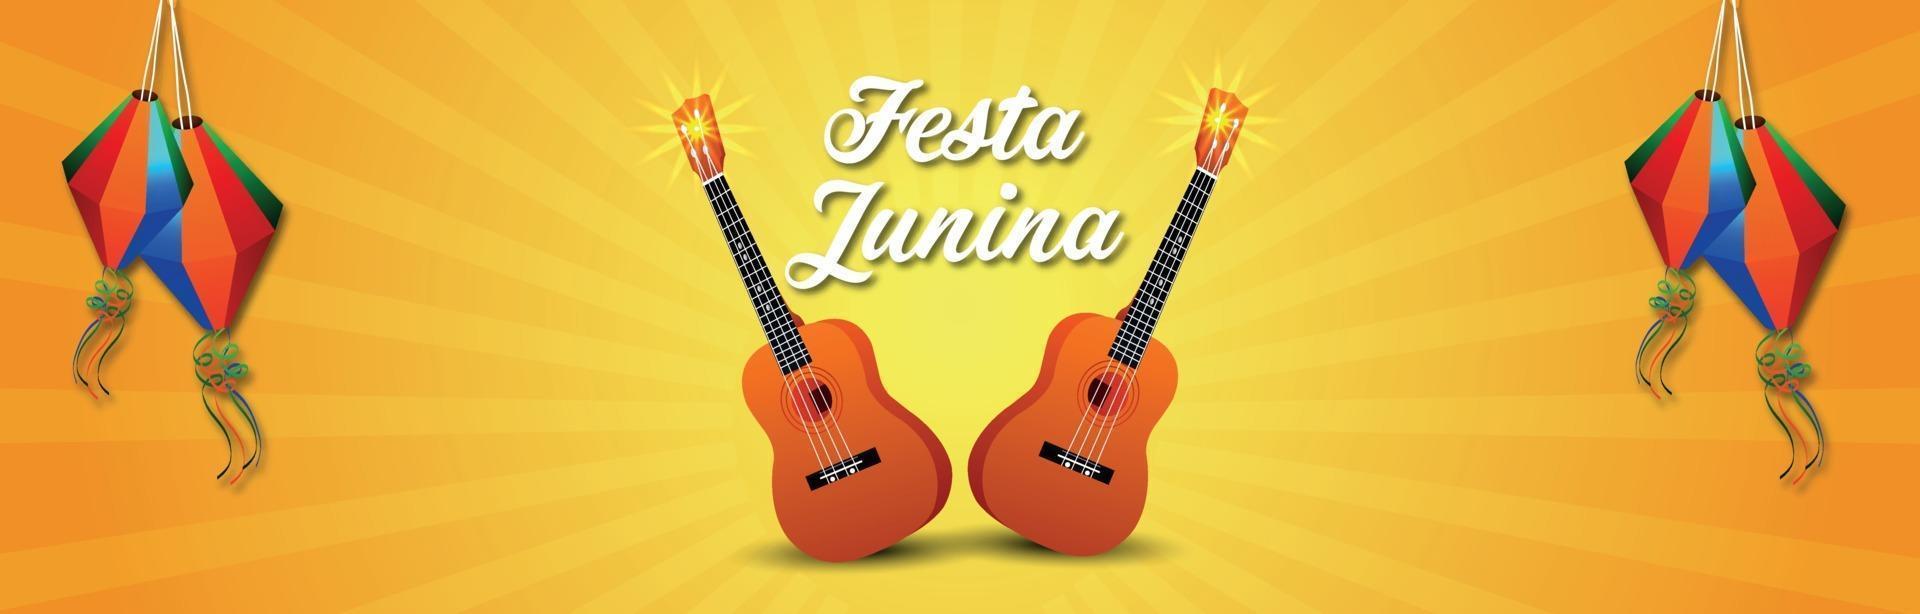 Banner convite do festival de festa junina com guitarra criativa vetor